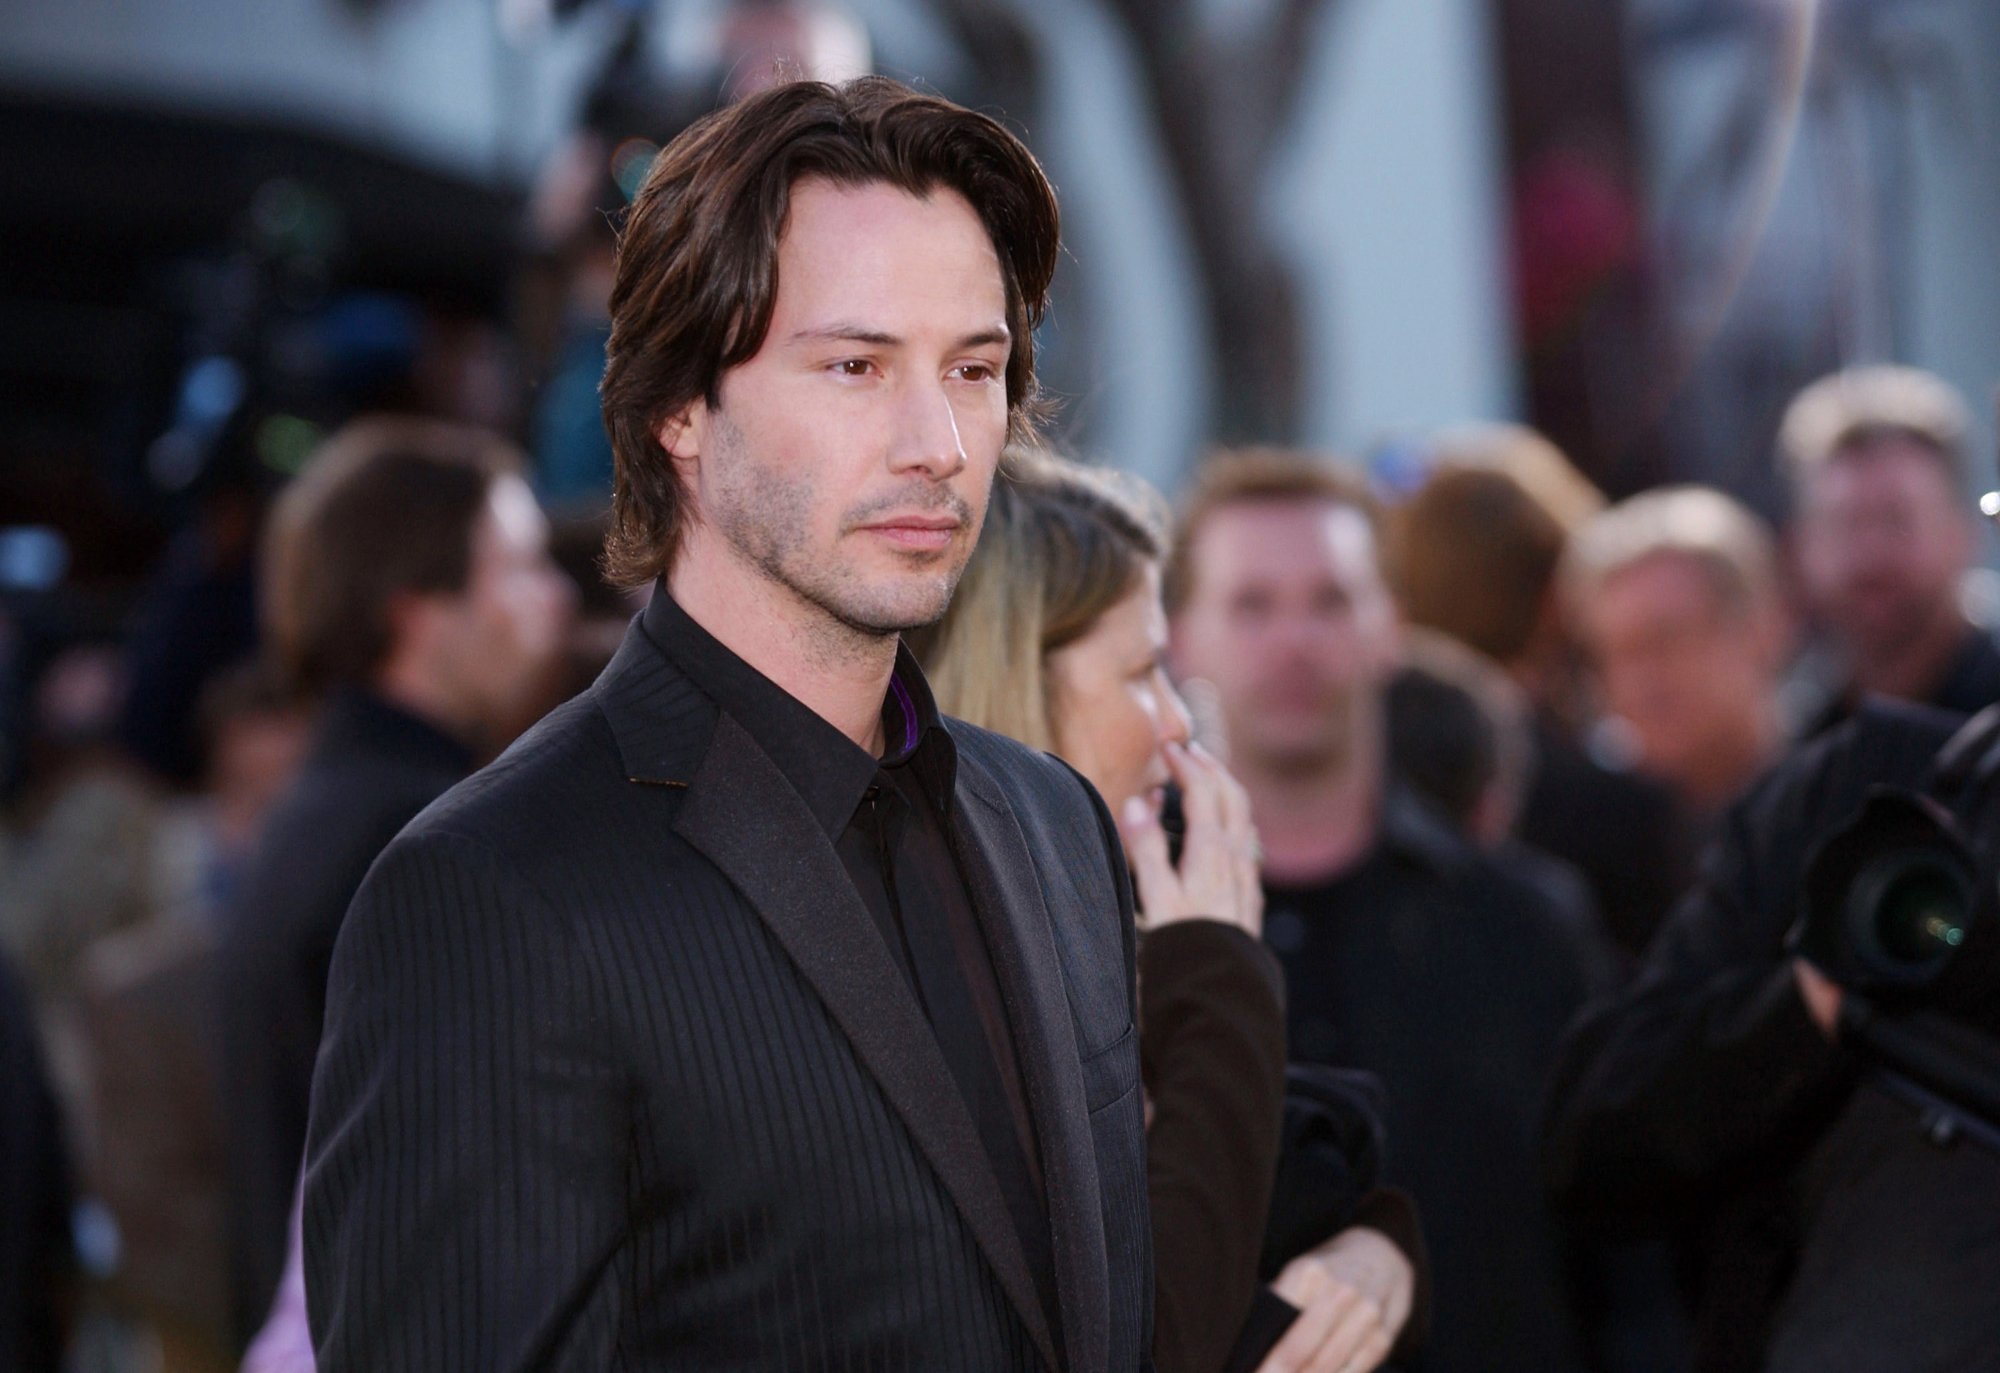 'The Matrix' Keanu Reeves wearing a black suit